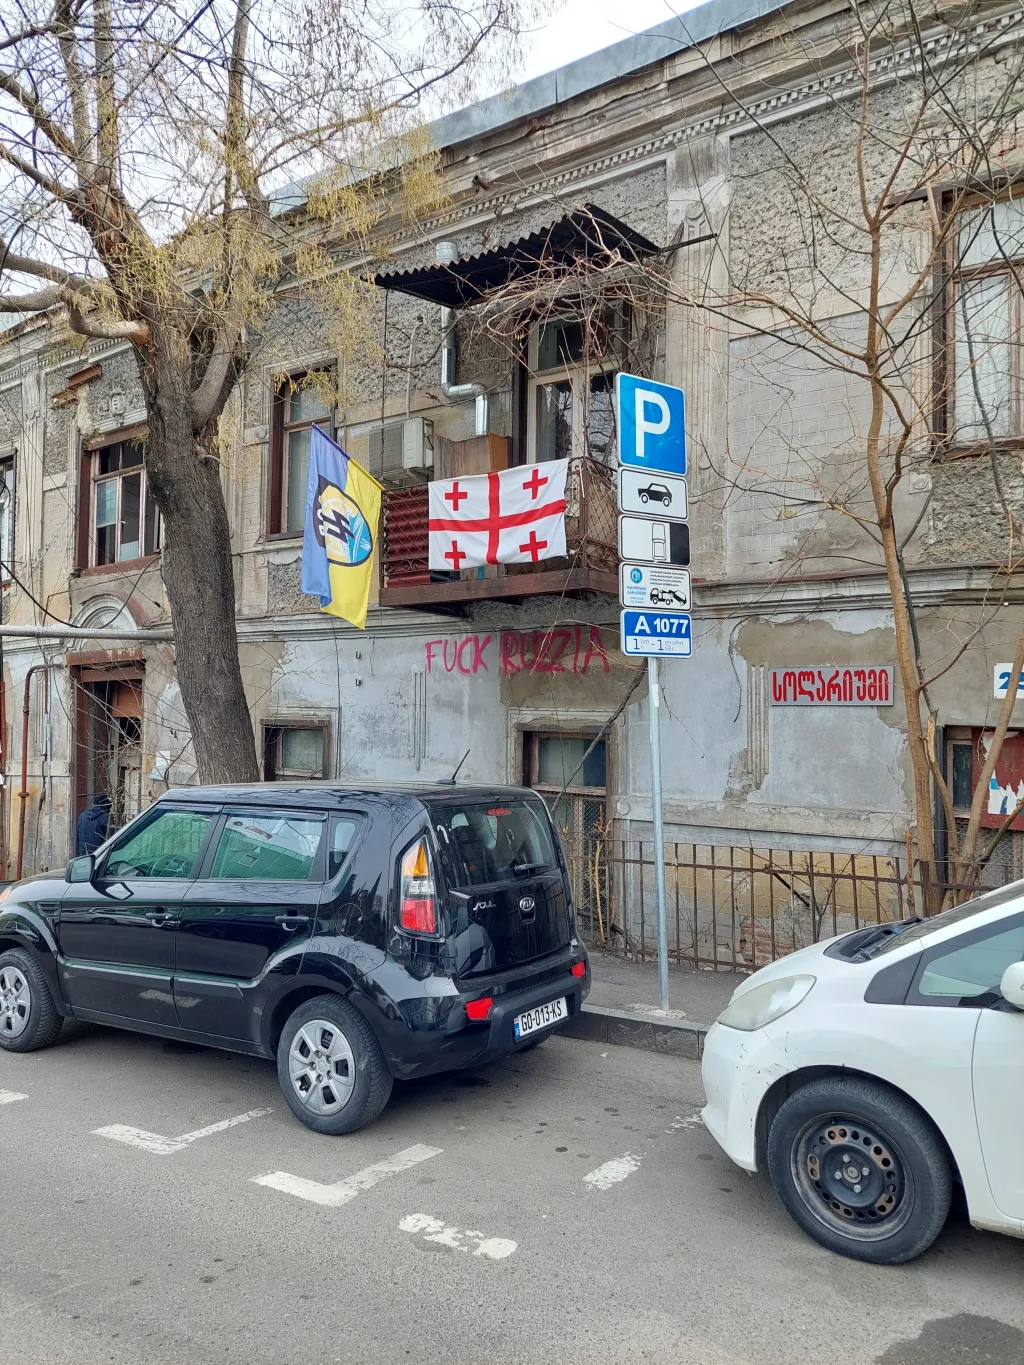 Vlajky Gruzie a pluku Azov, pod balkonem nápis „Je**t Rusko“